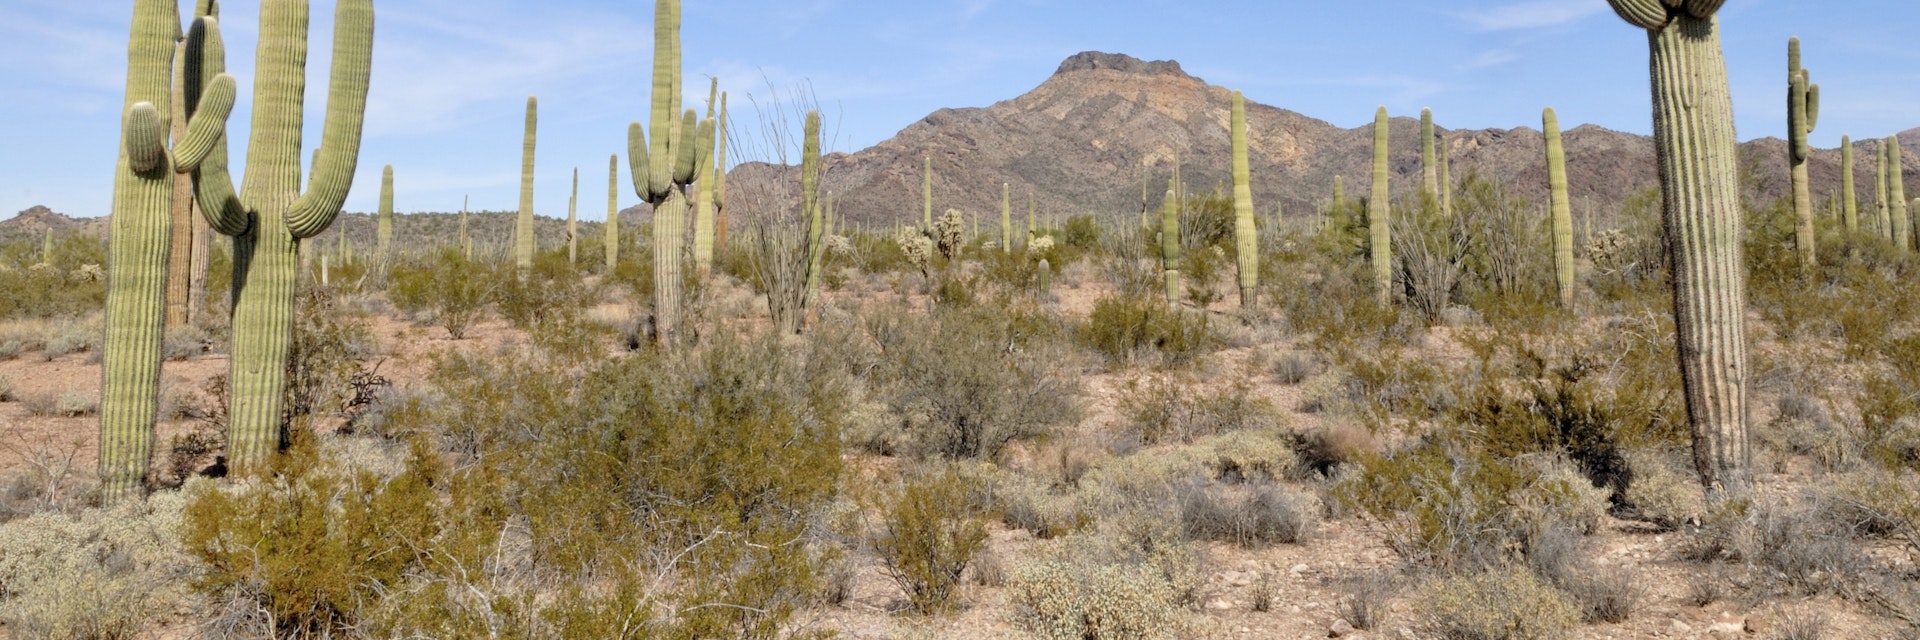 Saguaros (Carnegiea gigantea), cacti, in the evening sun, Catalina State Park, Tucson, Arizona, USA - stock photo